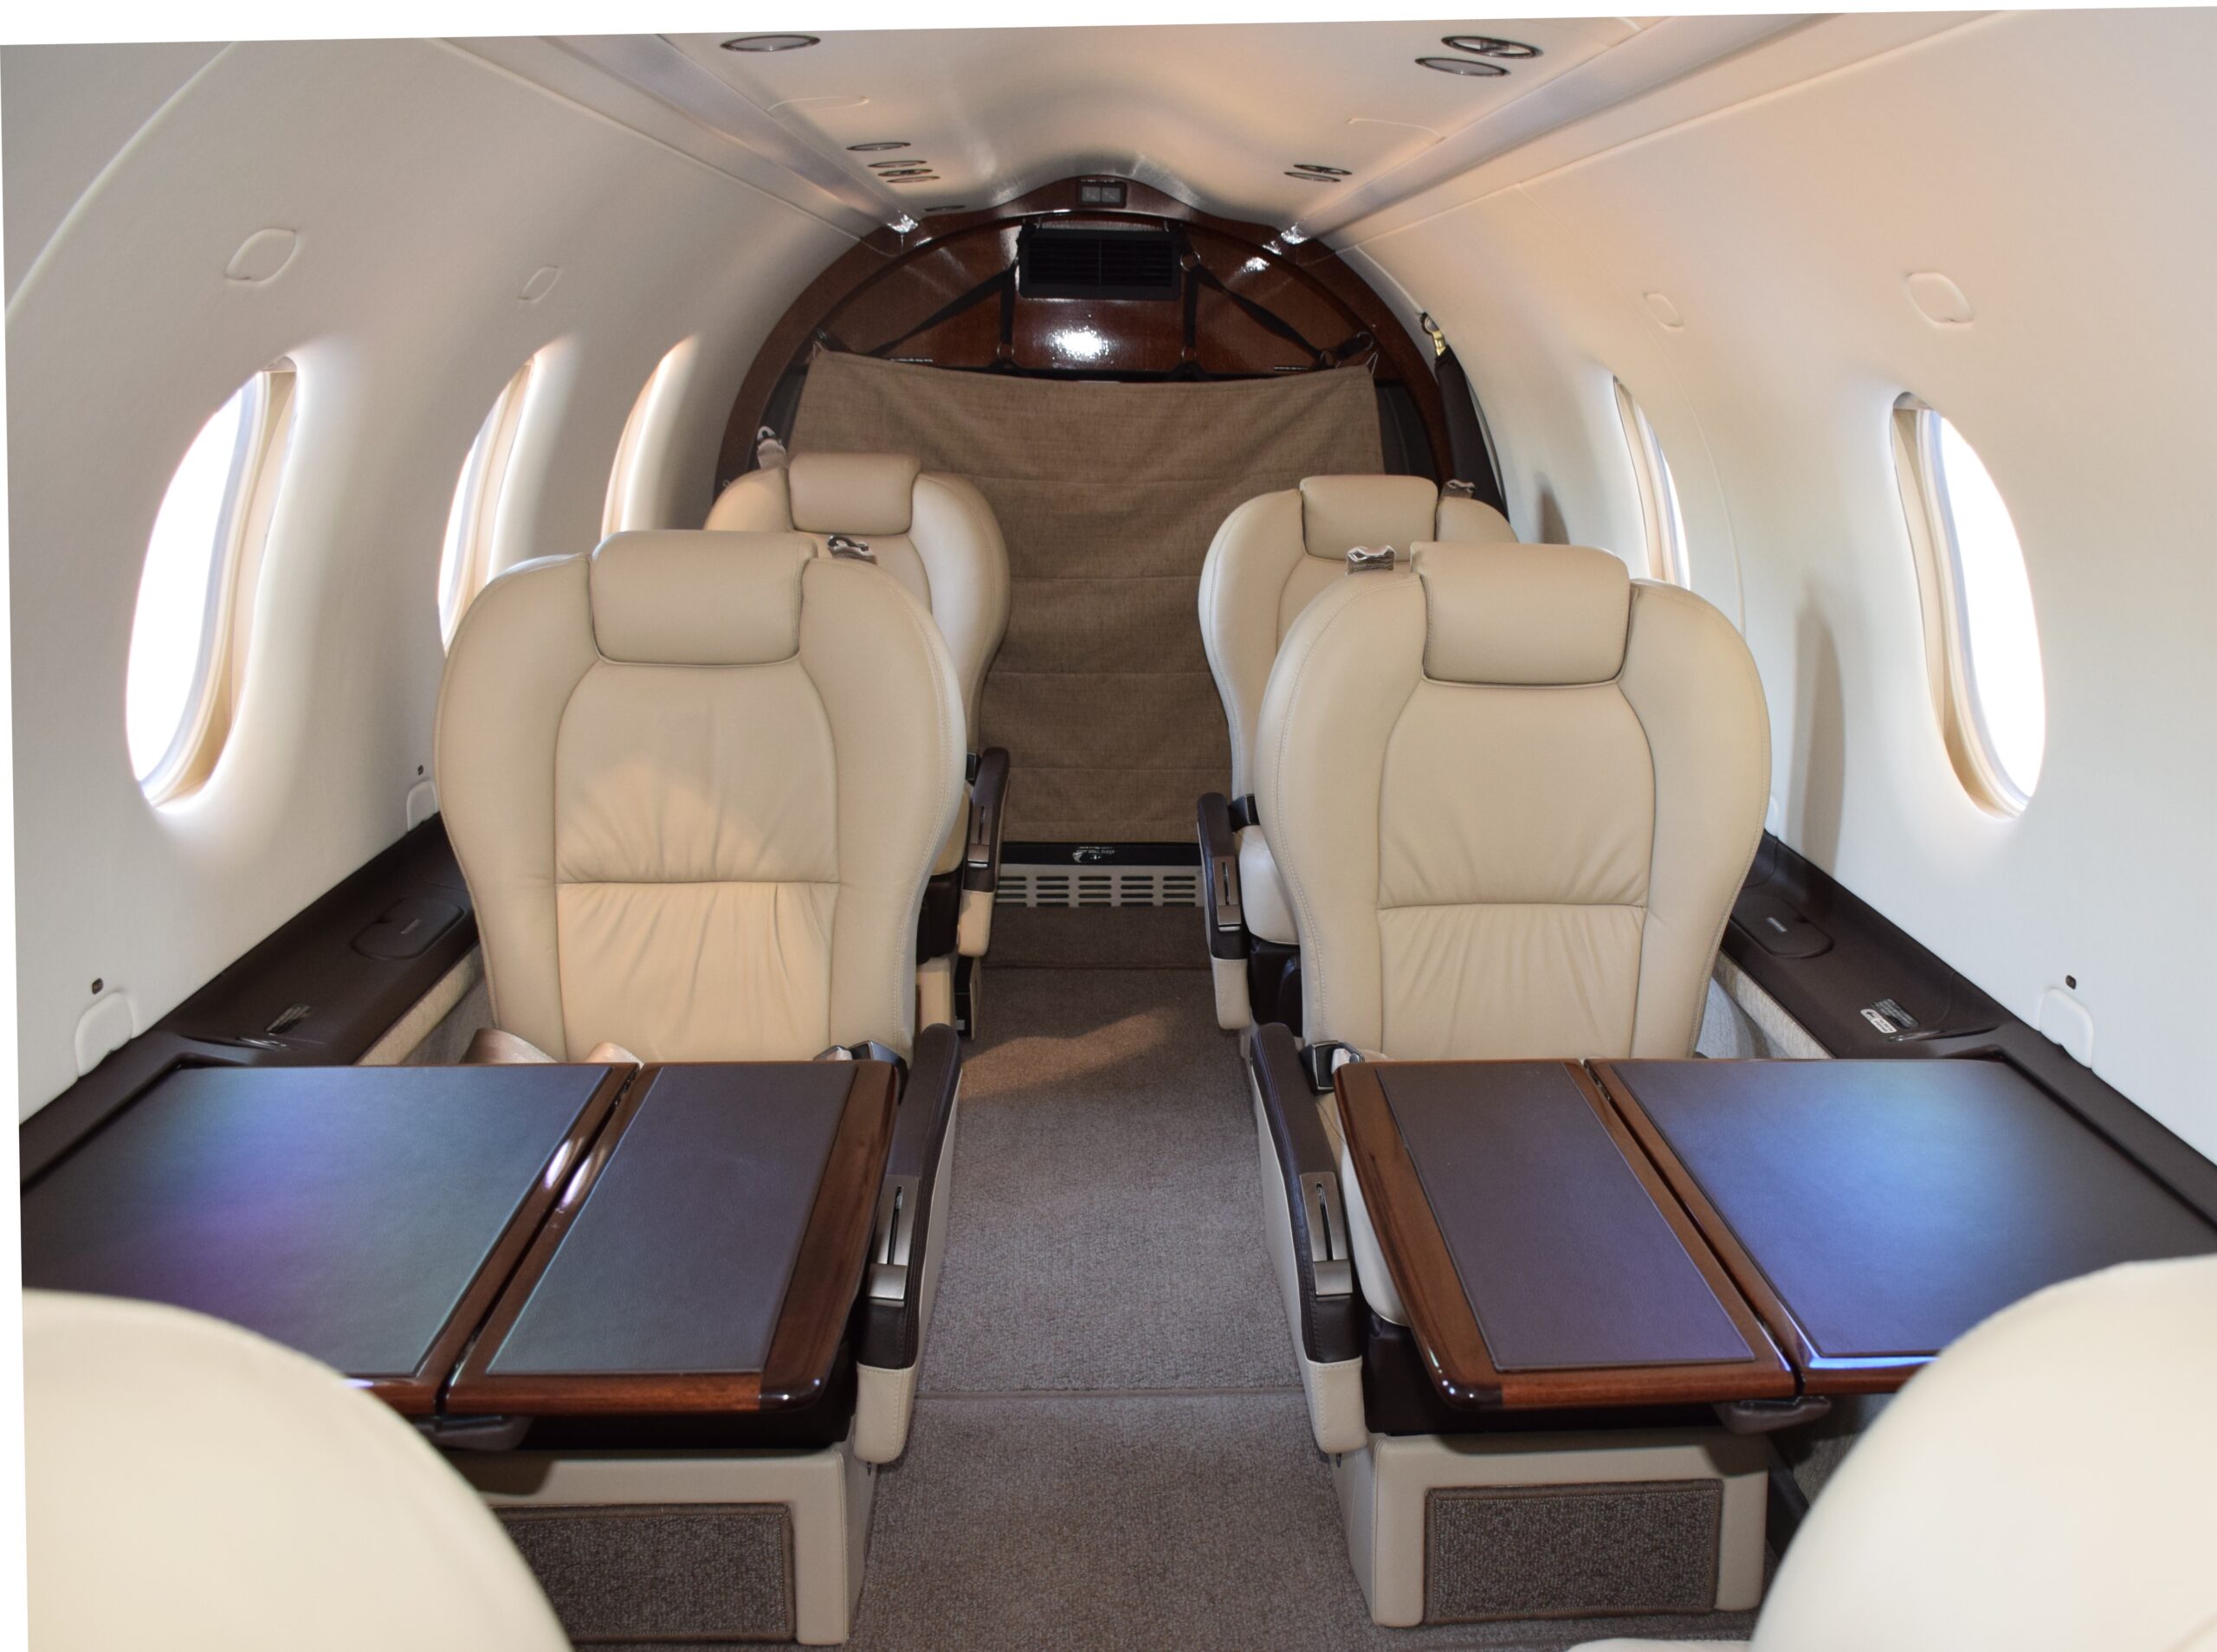 Pilatus PC12 interior, Pilatus seat upholstery